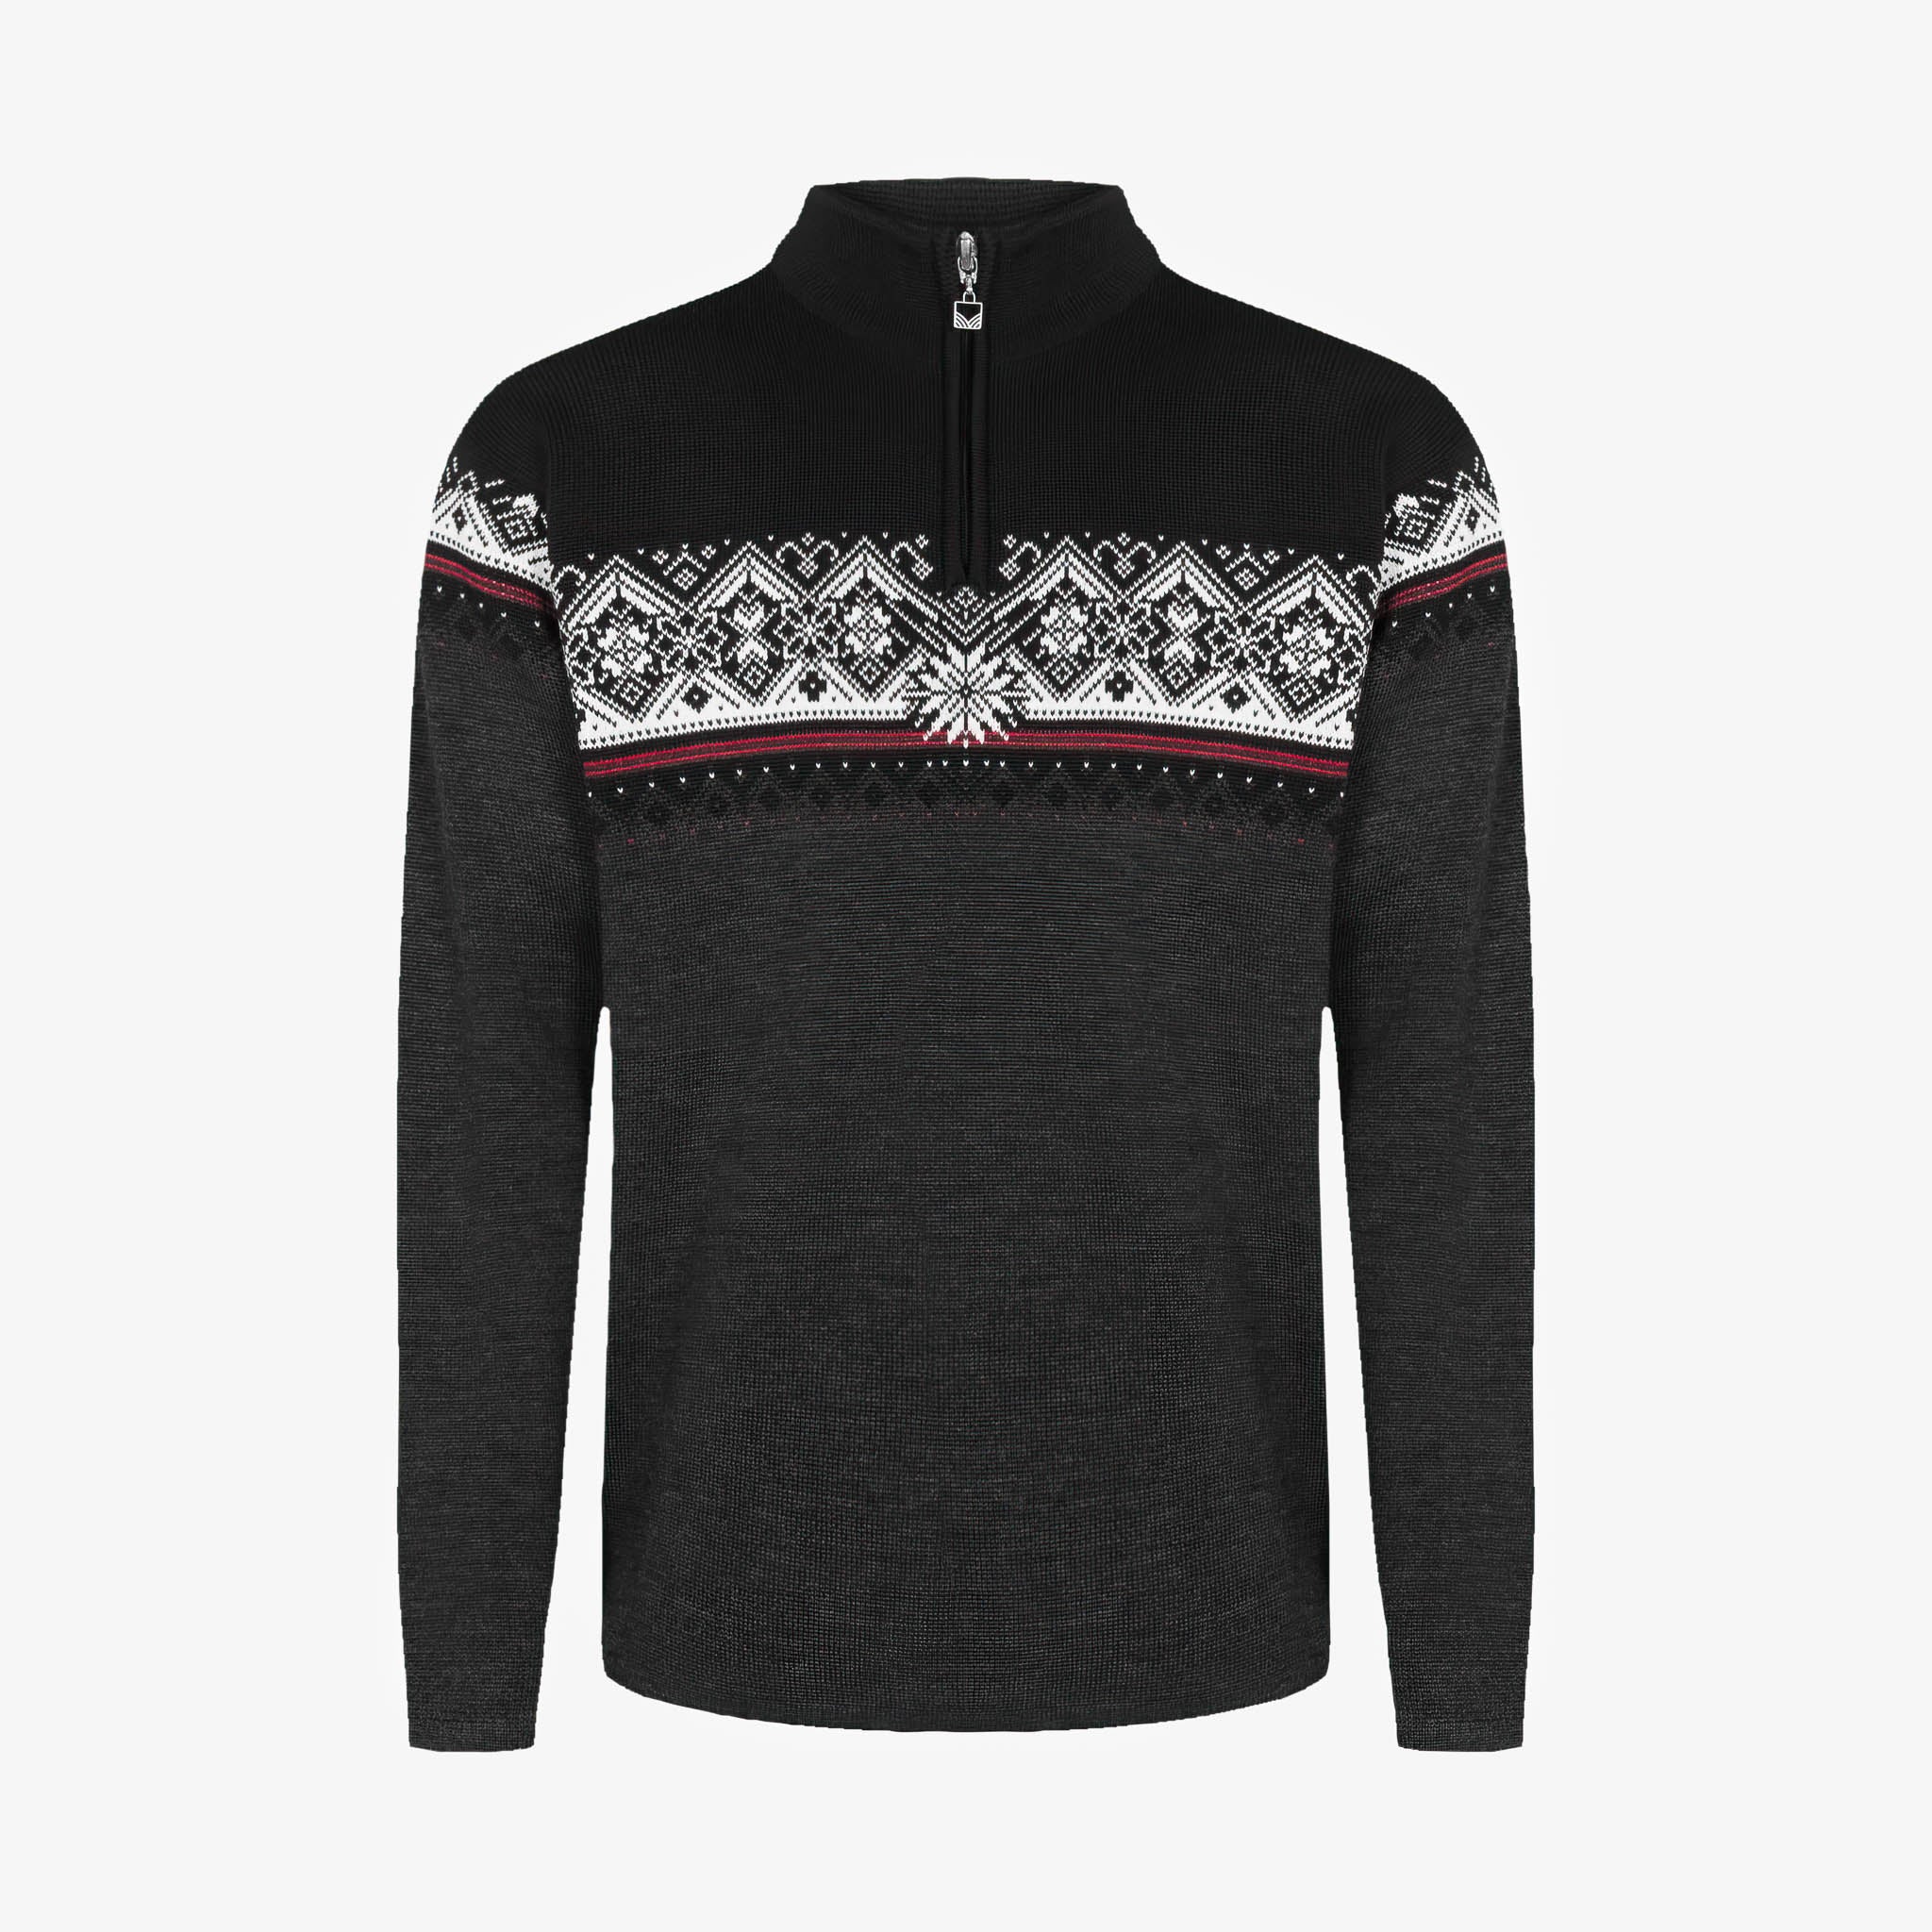 Moritz Men’s Sweater by Dale of Norway